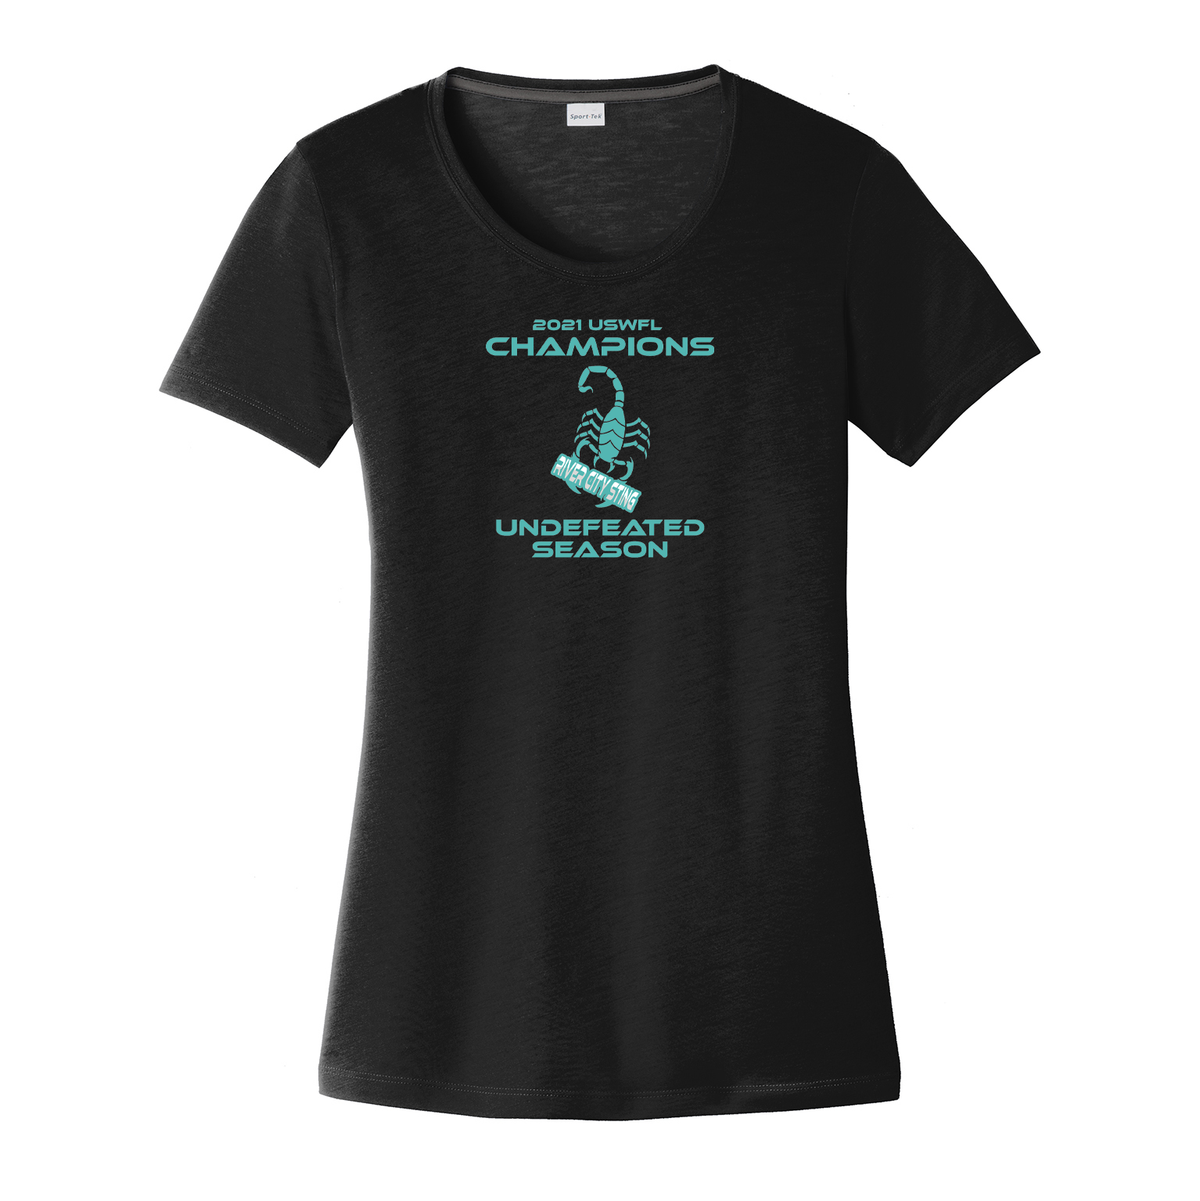 River City Sting Women's CottonTouch Performance T-Shirt